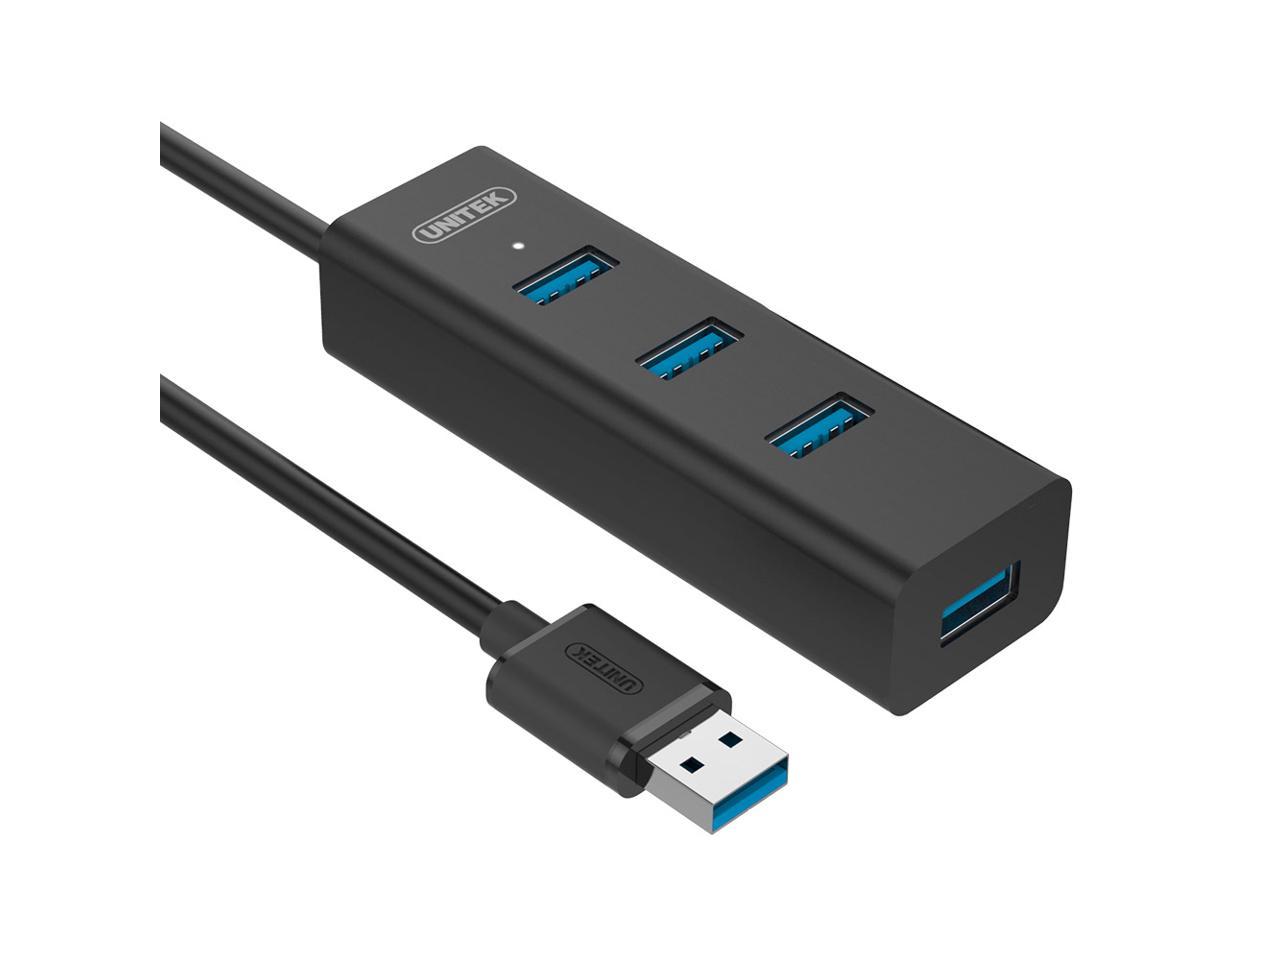 UNITEK USB 3.1 Hub 4 Type-A Ports Expansion With External Power Supply Port